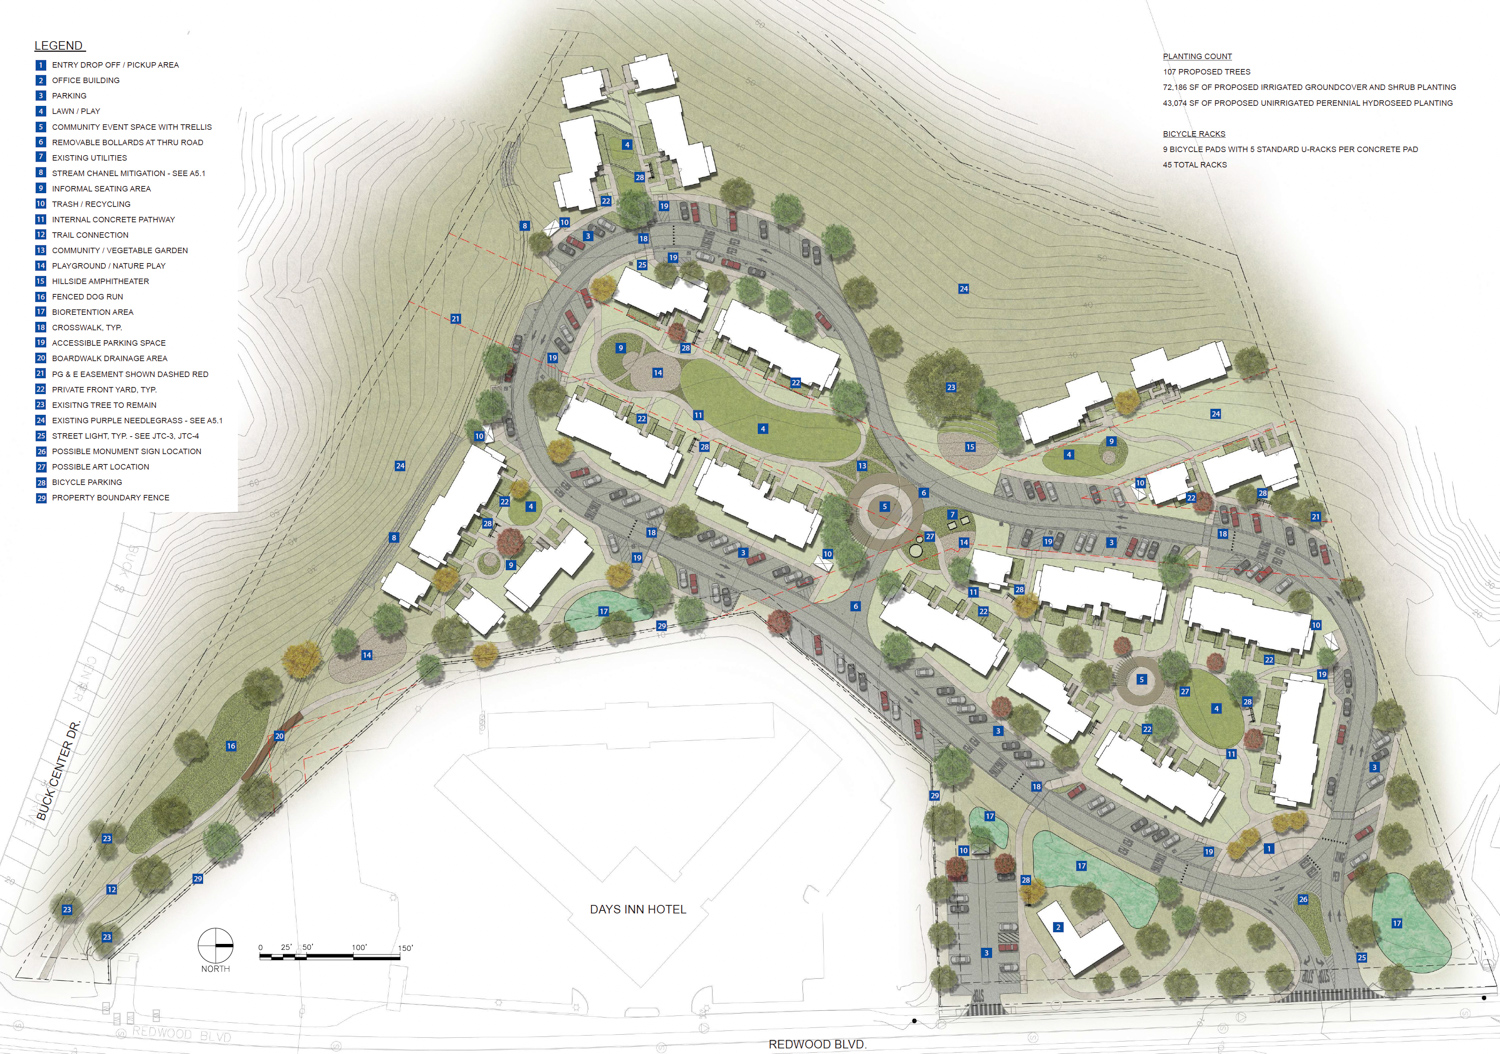 Habitat Redwood Boulevard site map, illustration by Dorman Associates